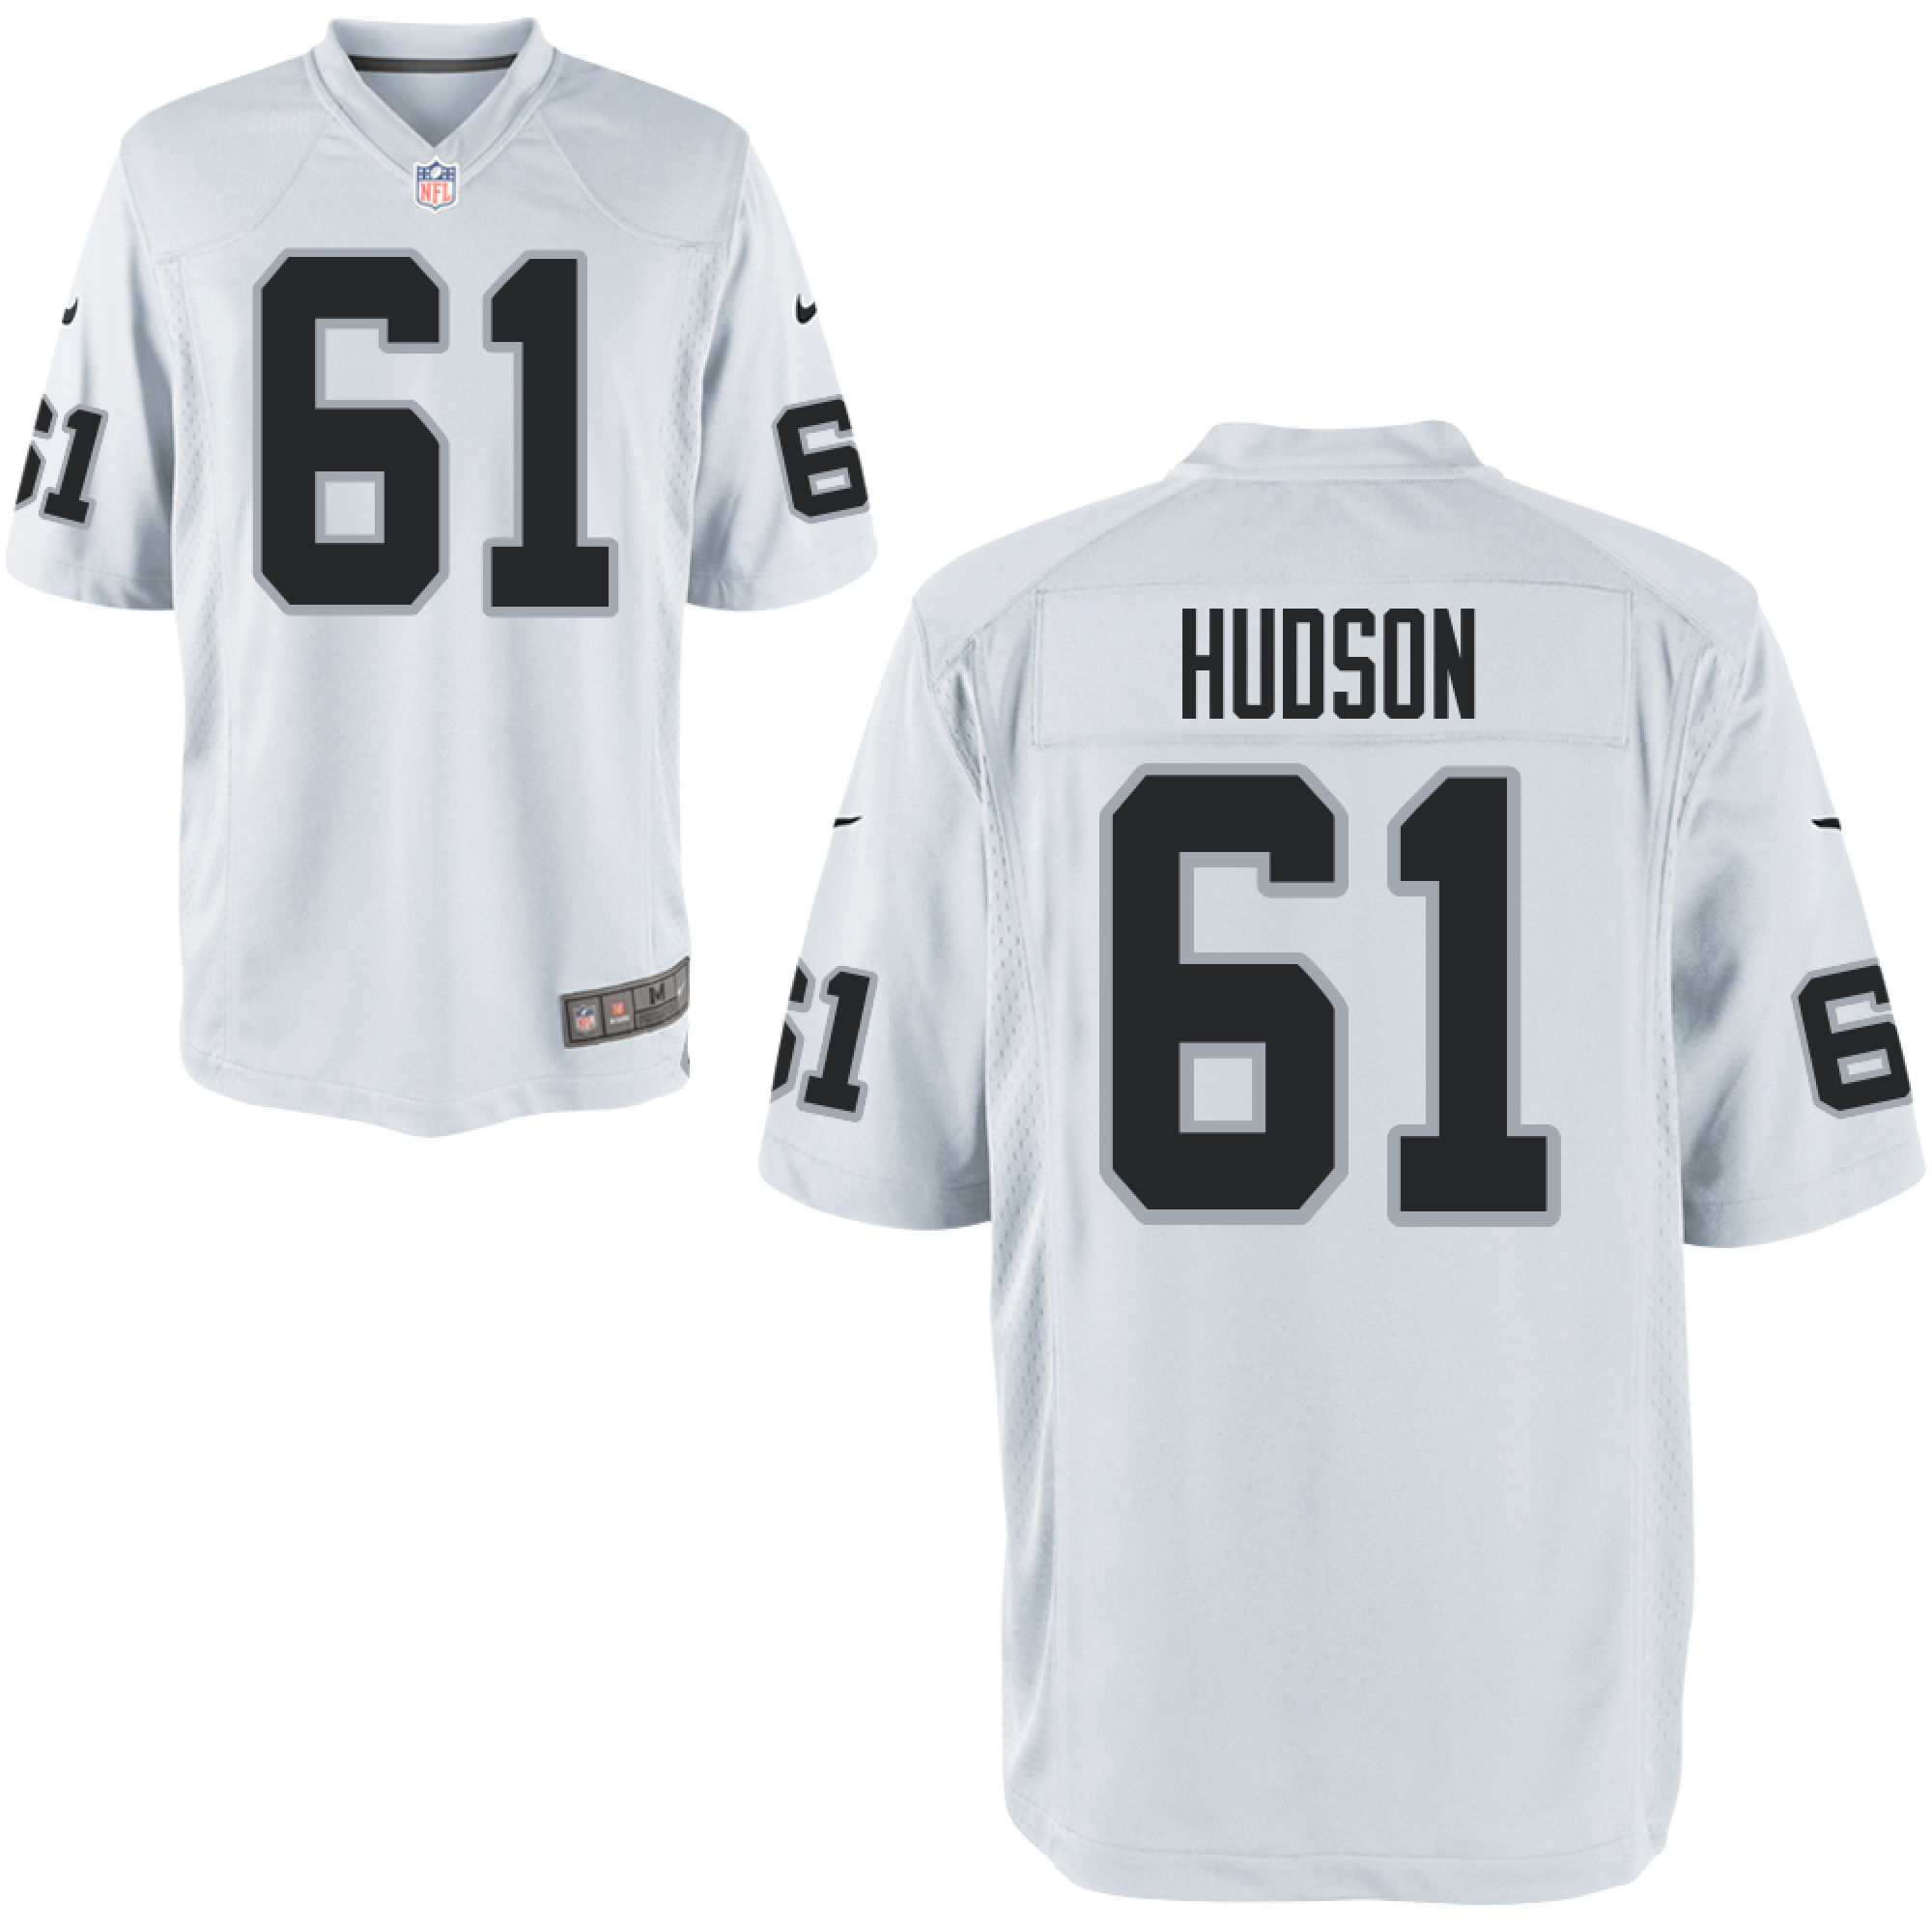 Nike Raiders 61 Rodney Hudson White Elite Jersey